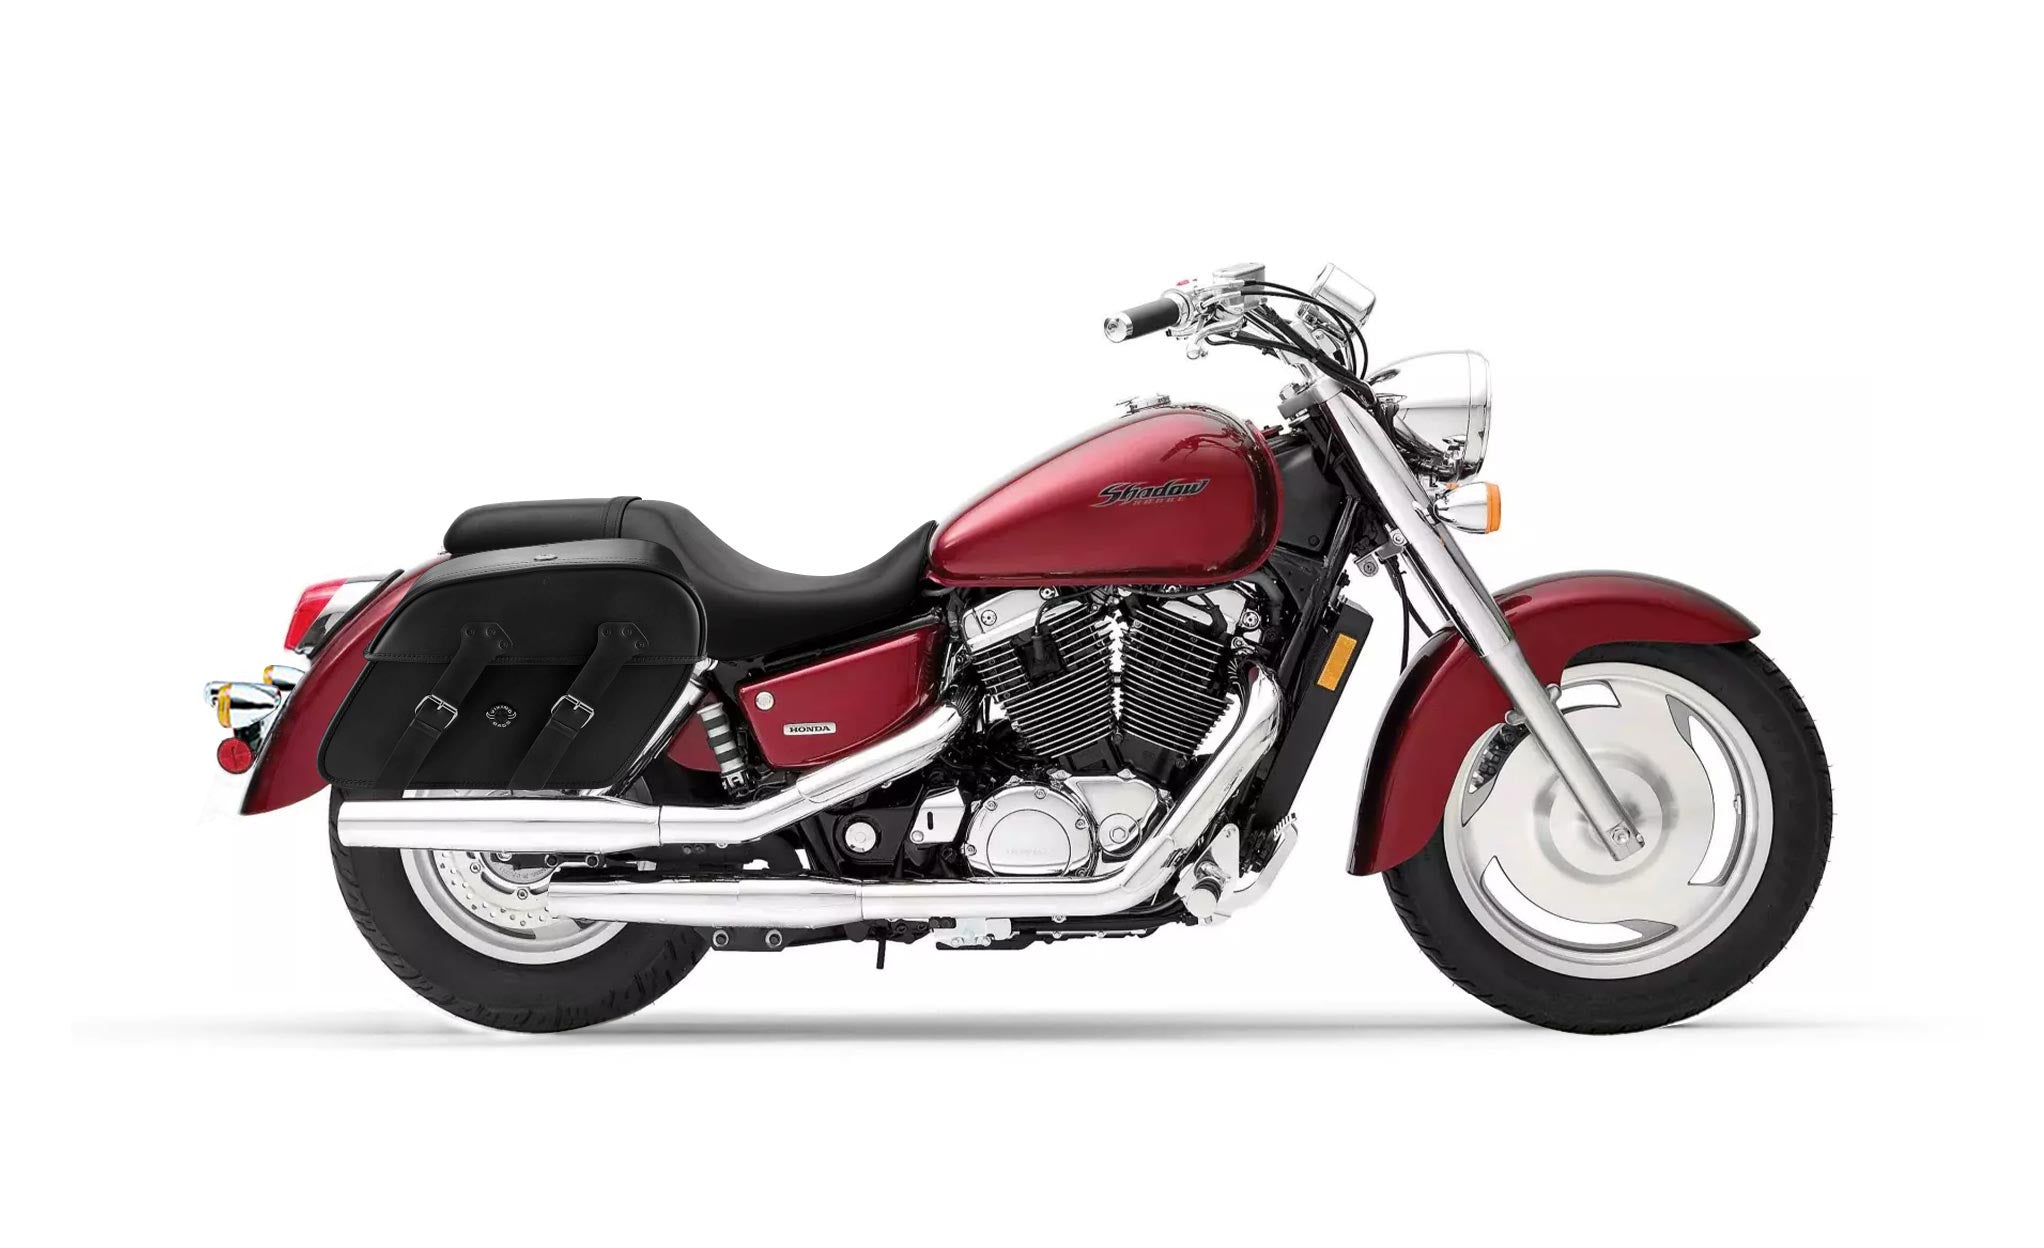 Viking Raven Extra Large Honda Shadow 1100 Sabre Shock Cut Out Leather Motorcycle Saddlebags on Bike Photo @expand